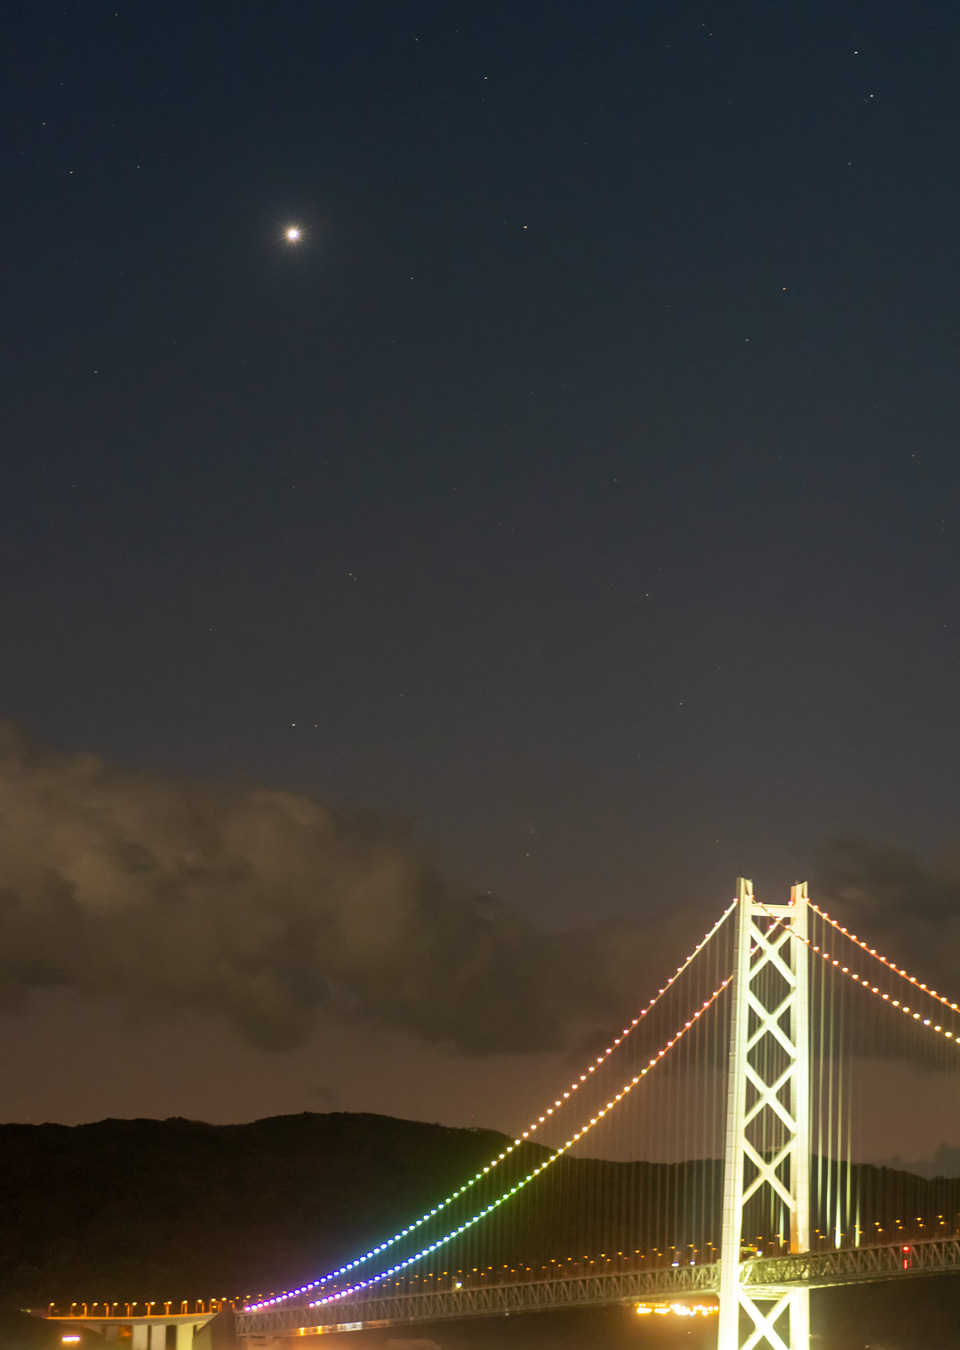 2021/12/17 18:00 レナード彗星・金星・明石海峡大橋